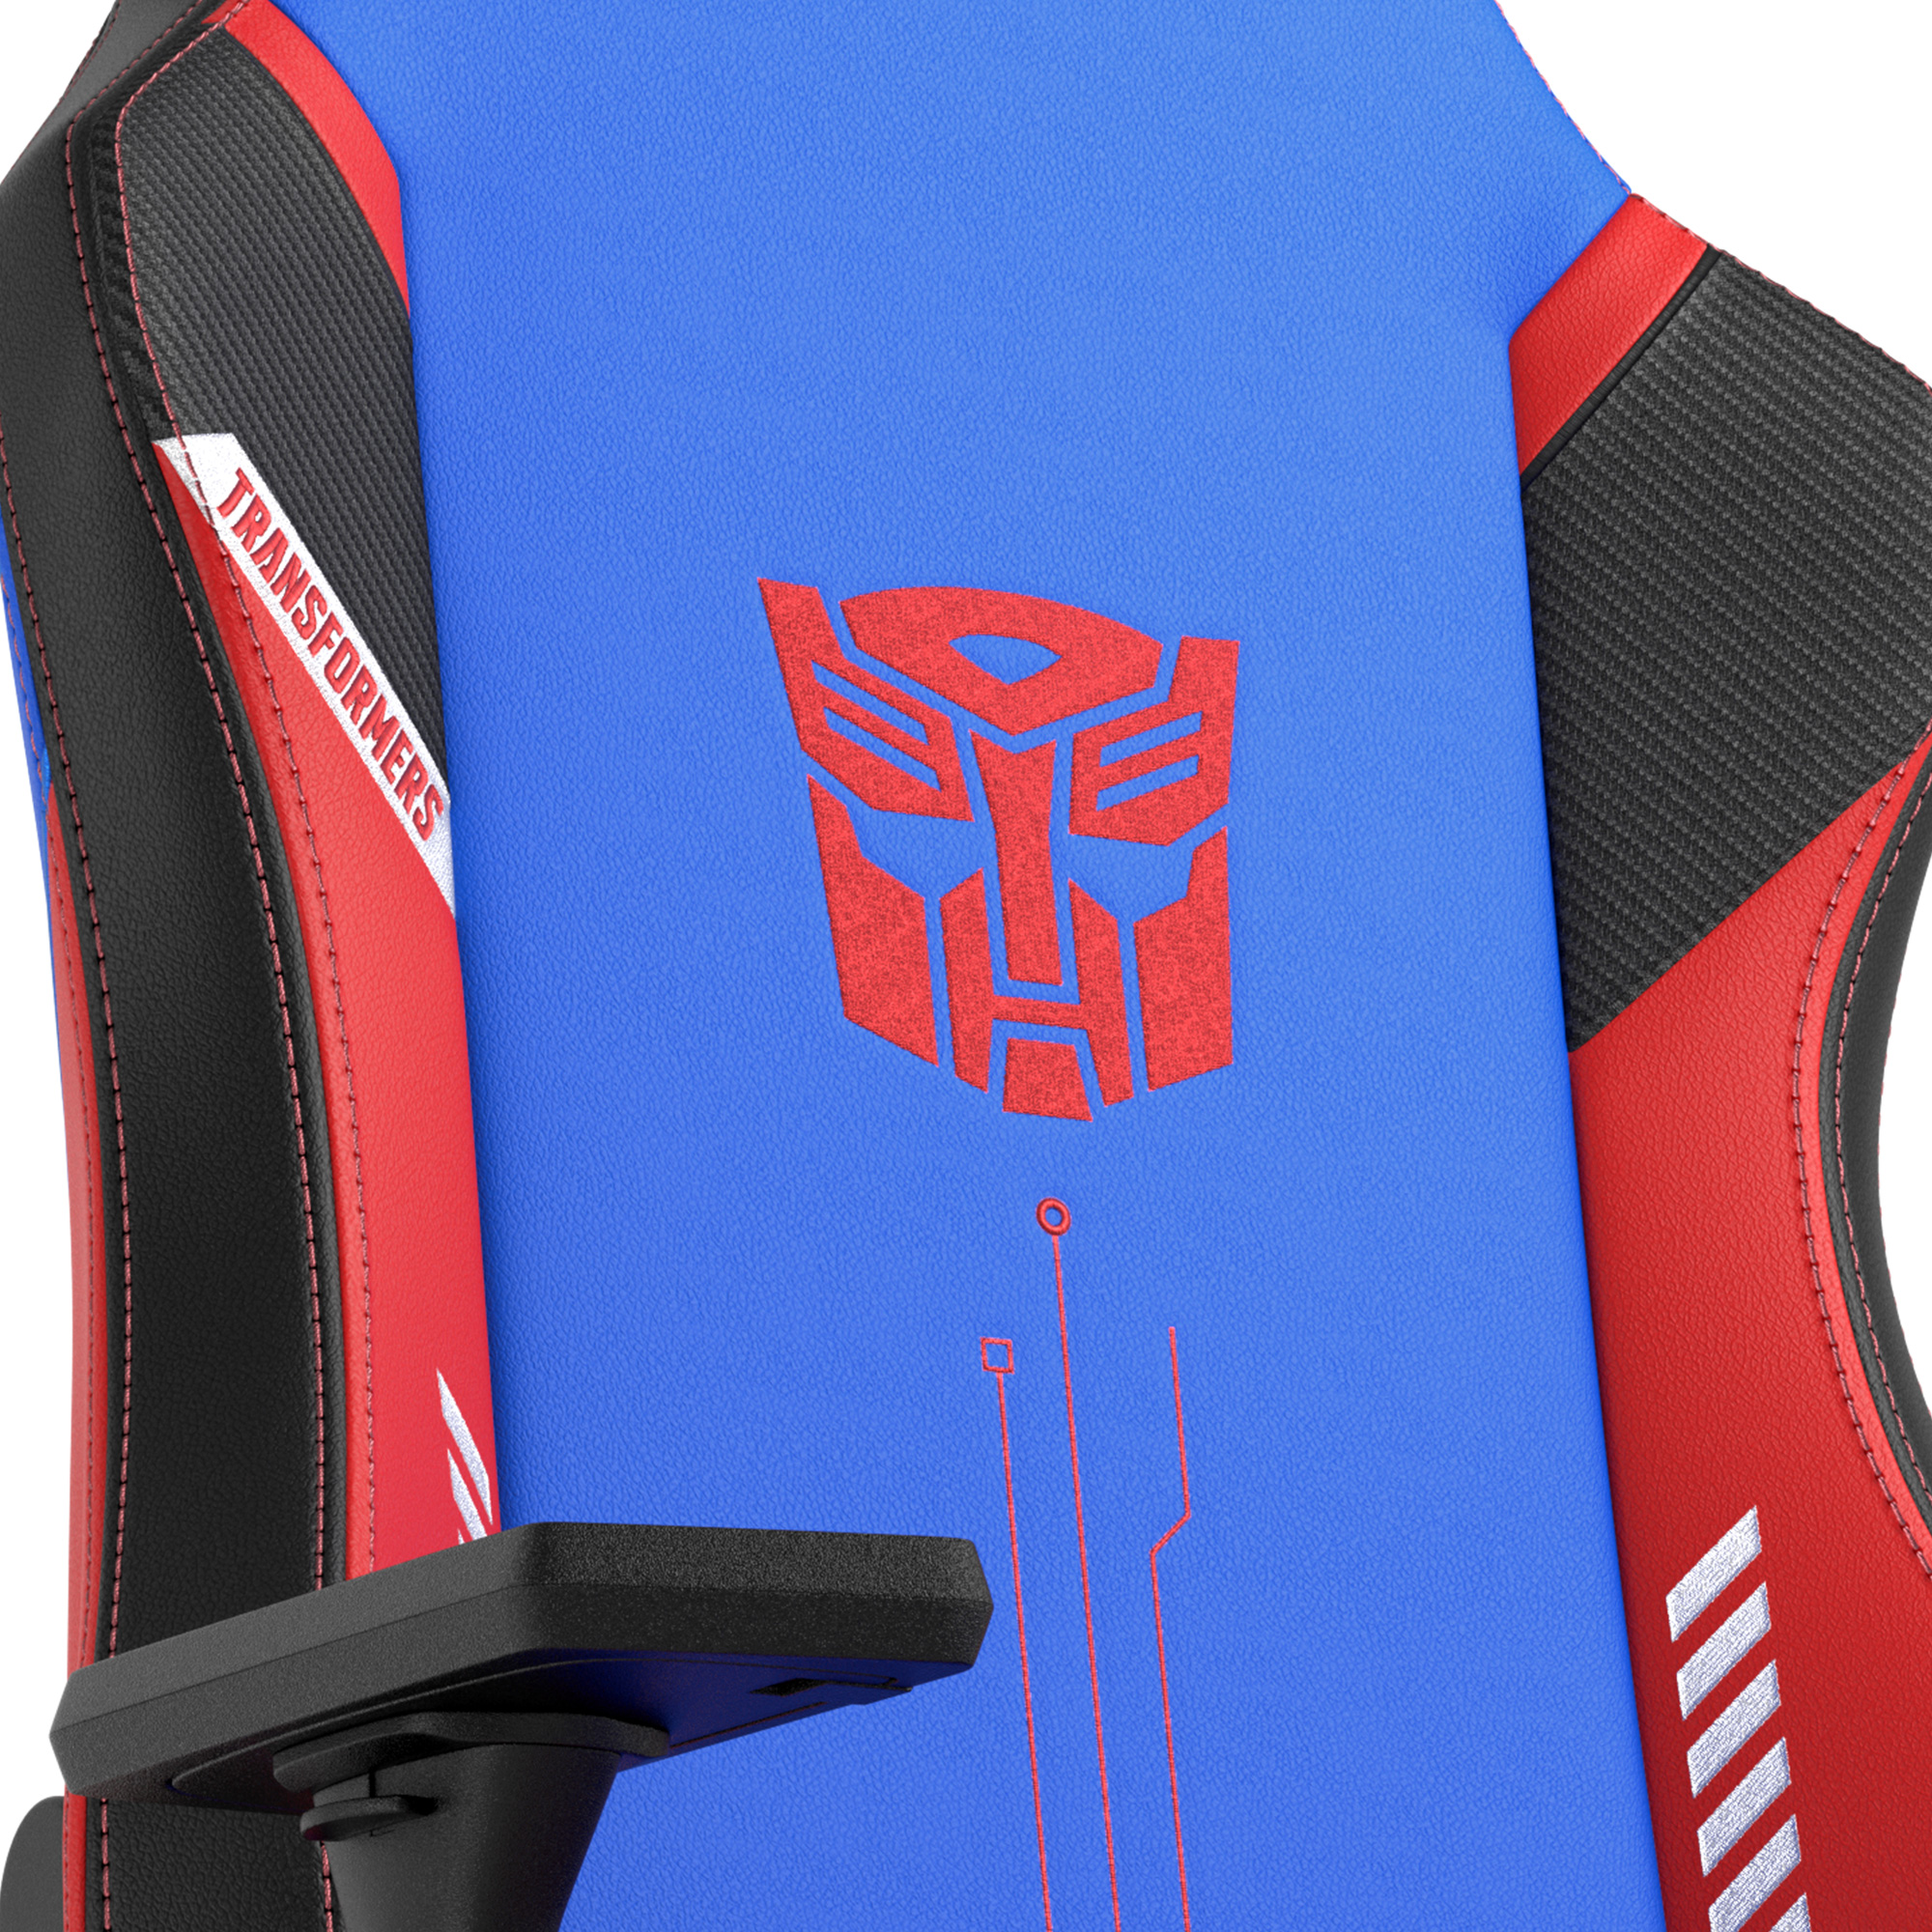 nitro-concepts - X1000 Gaming Chair Transformers Optimus Prime Edition